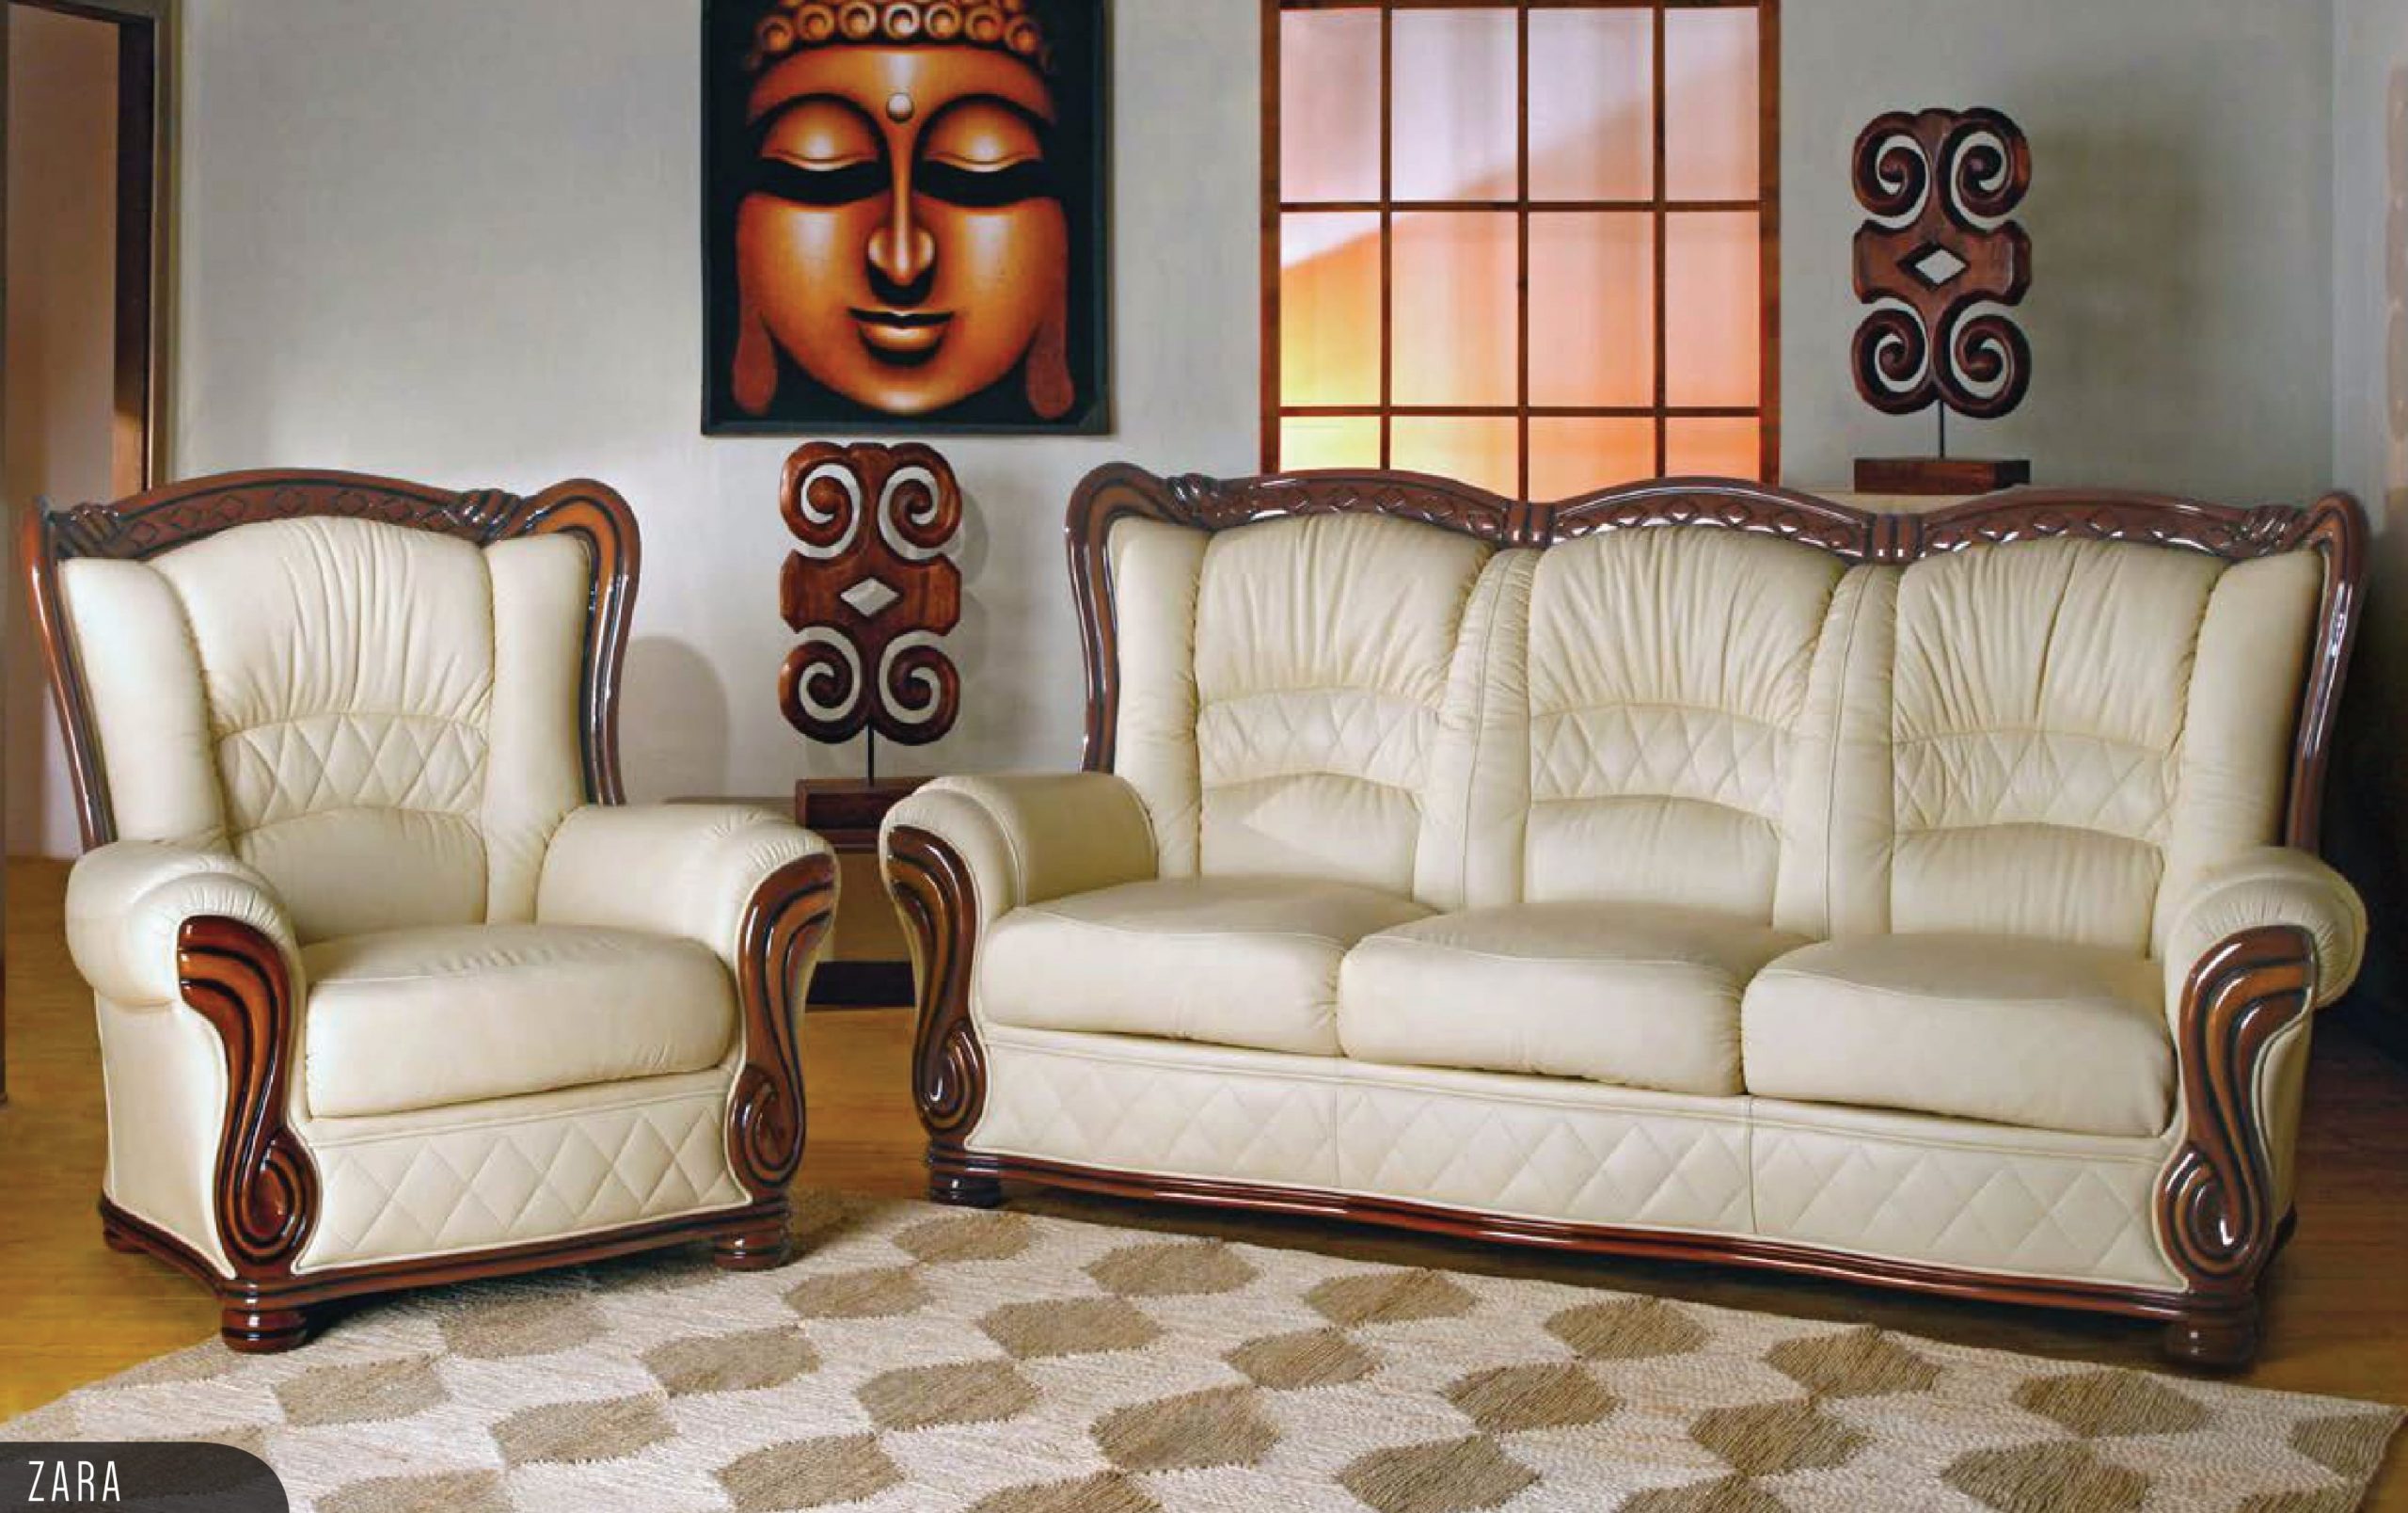 ZARA Leather Sofa Collection | Home Flair